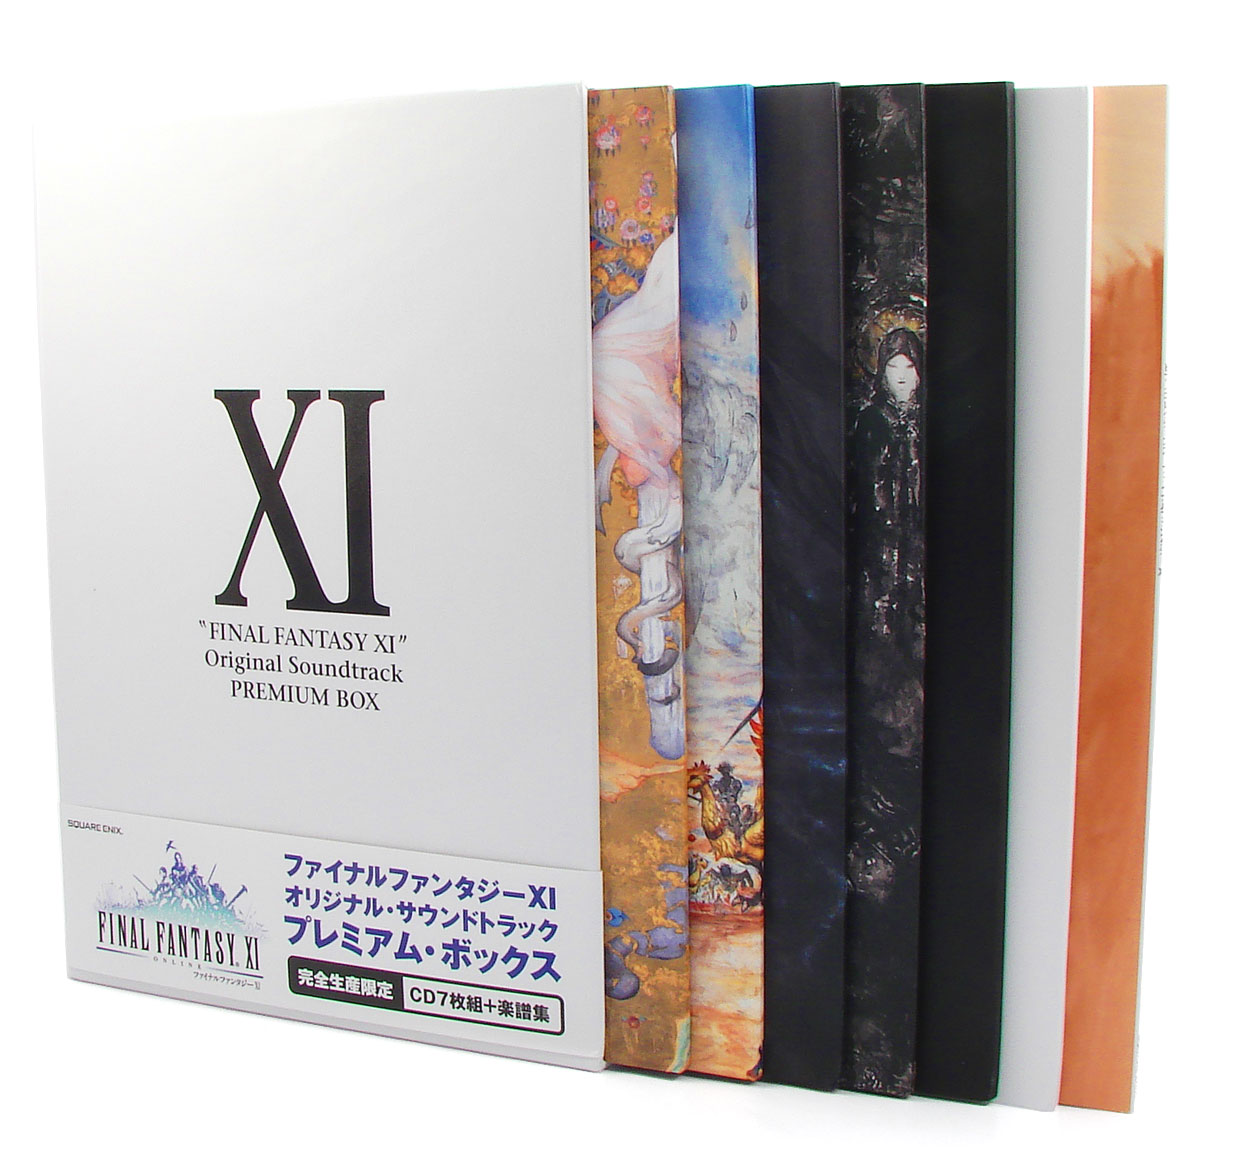 Final Fantasy XI Original Soundtrack Premium Box [Limited Release]